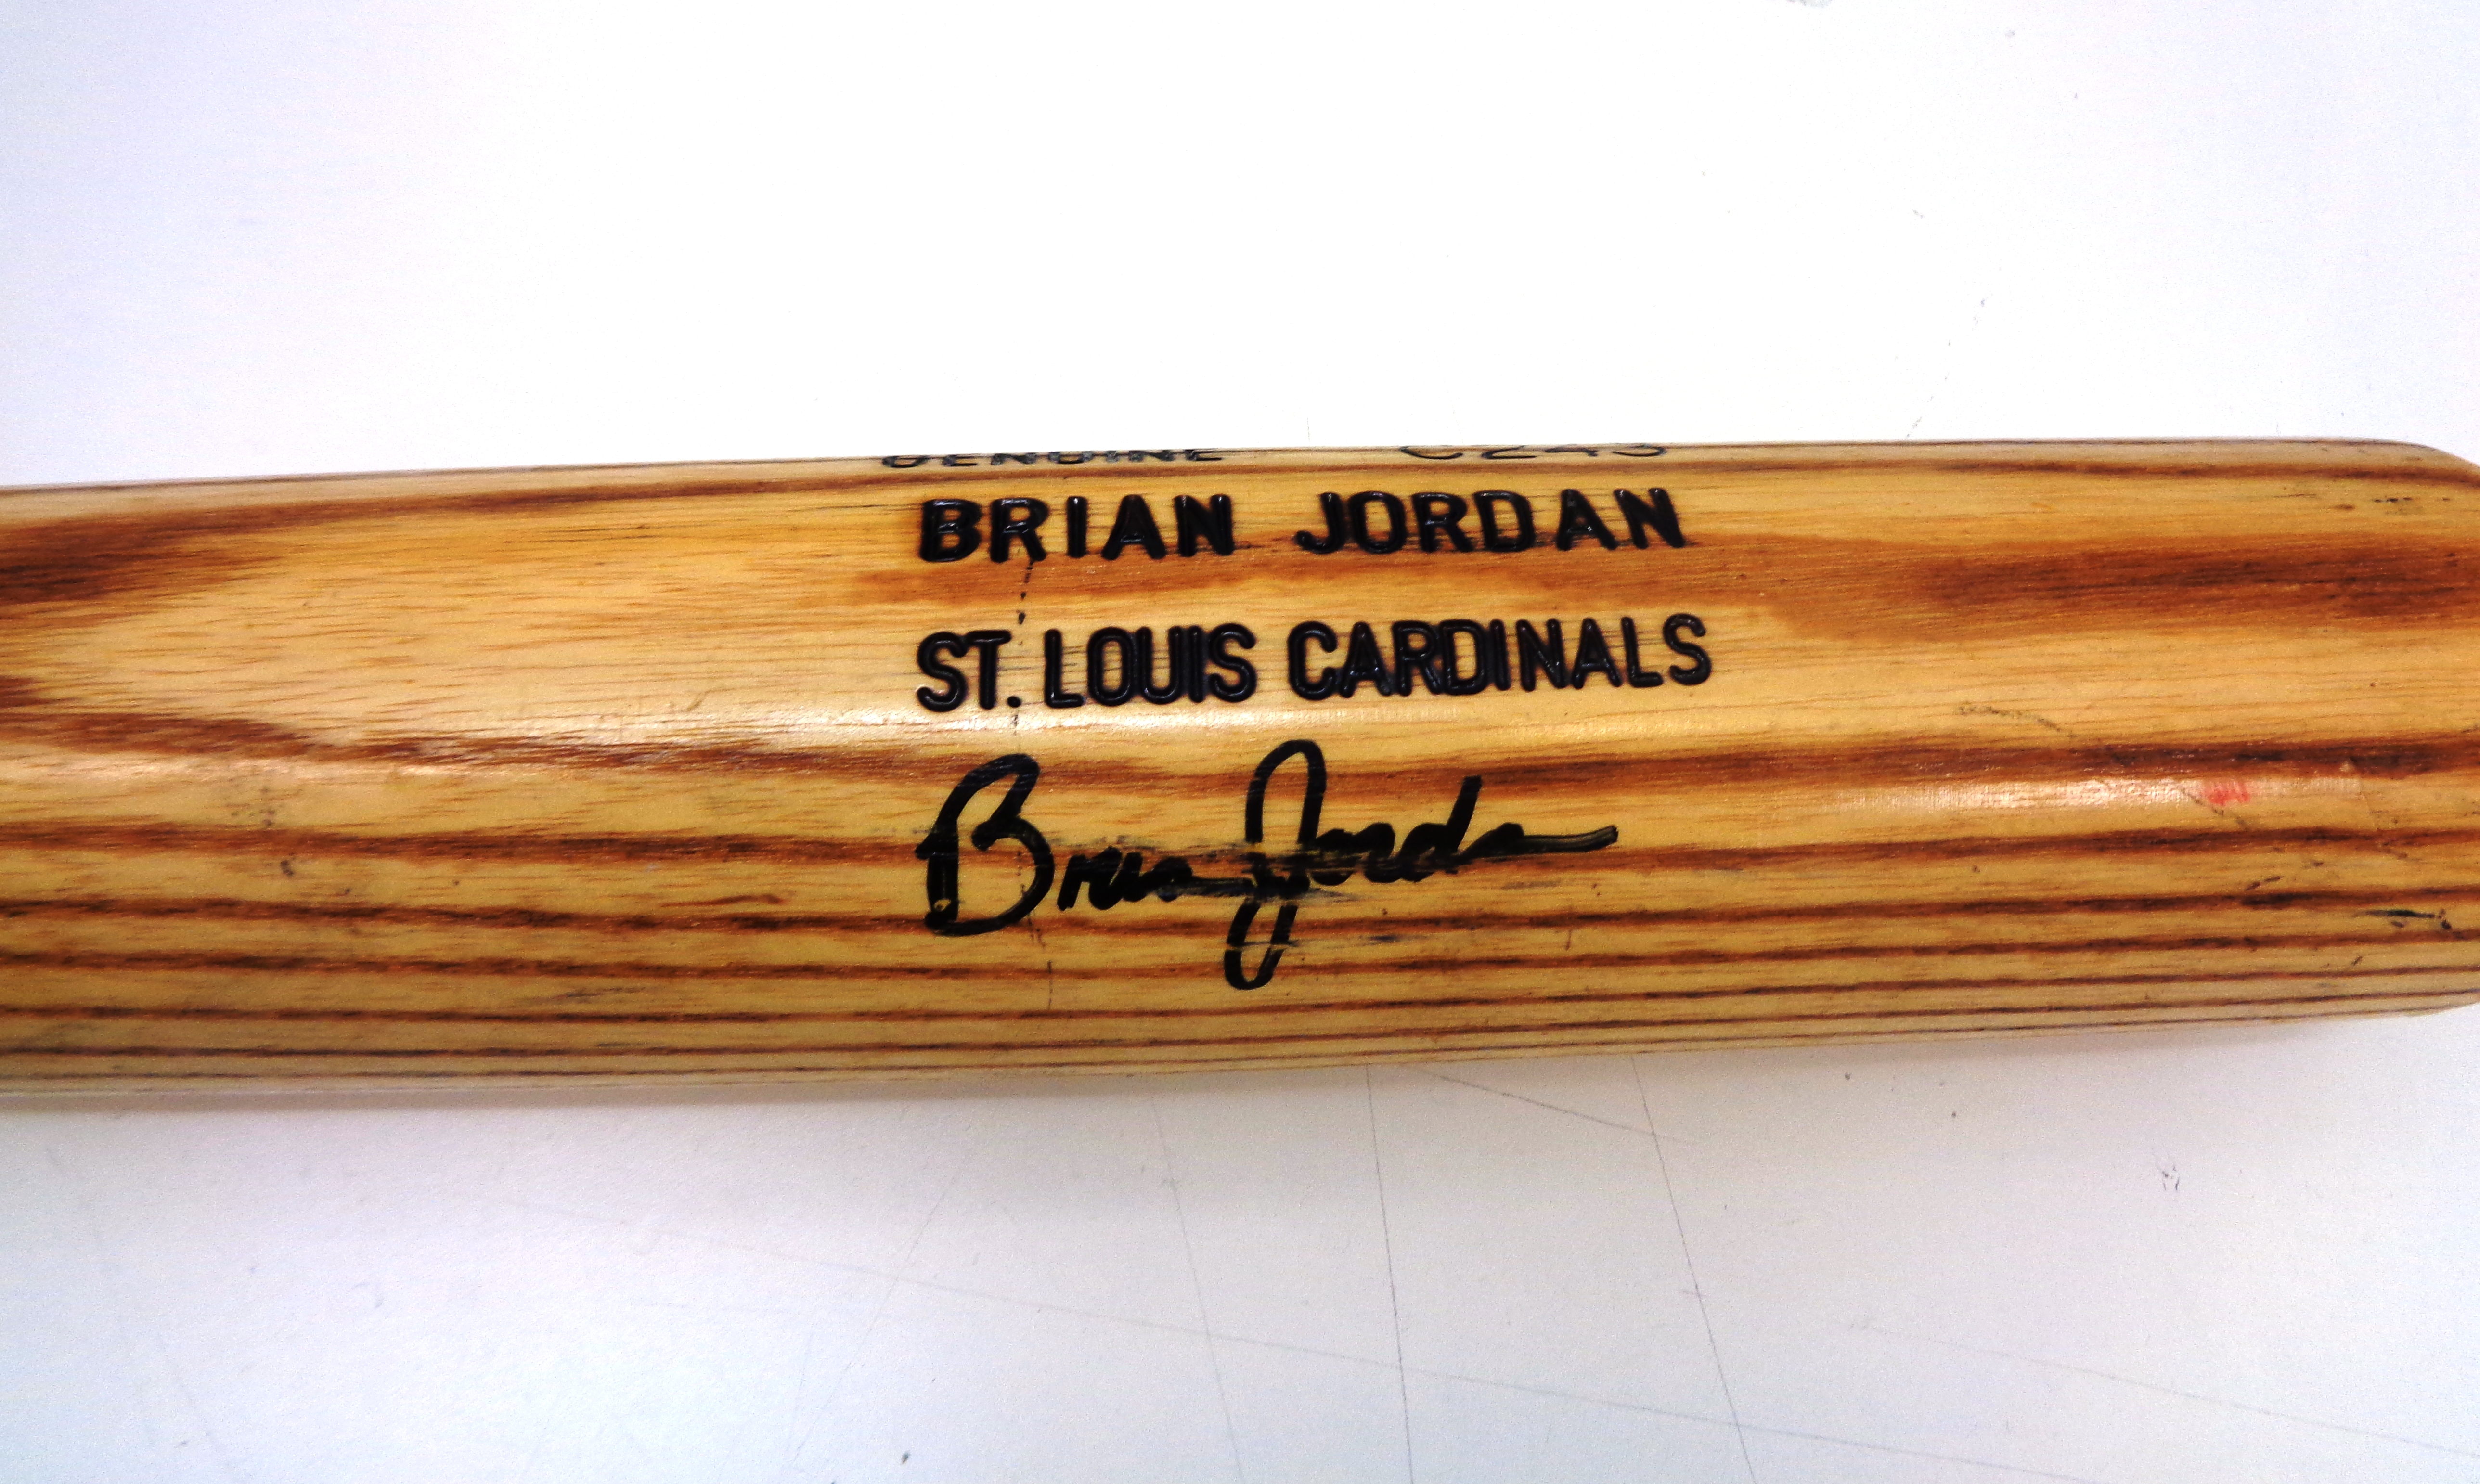 Brian Jordan Autographed Memorabilia